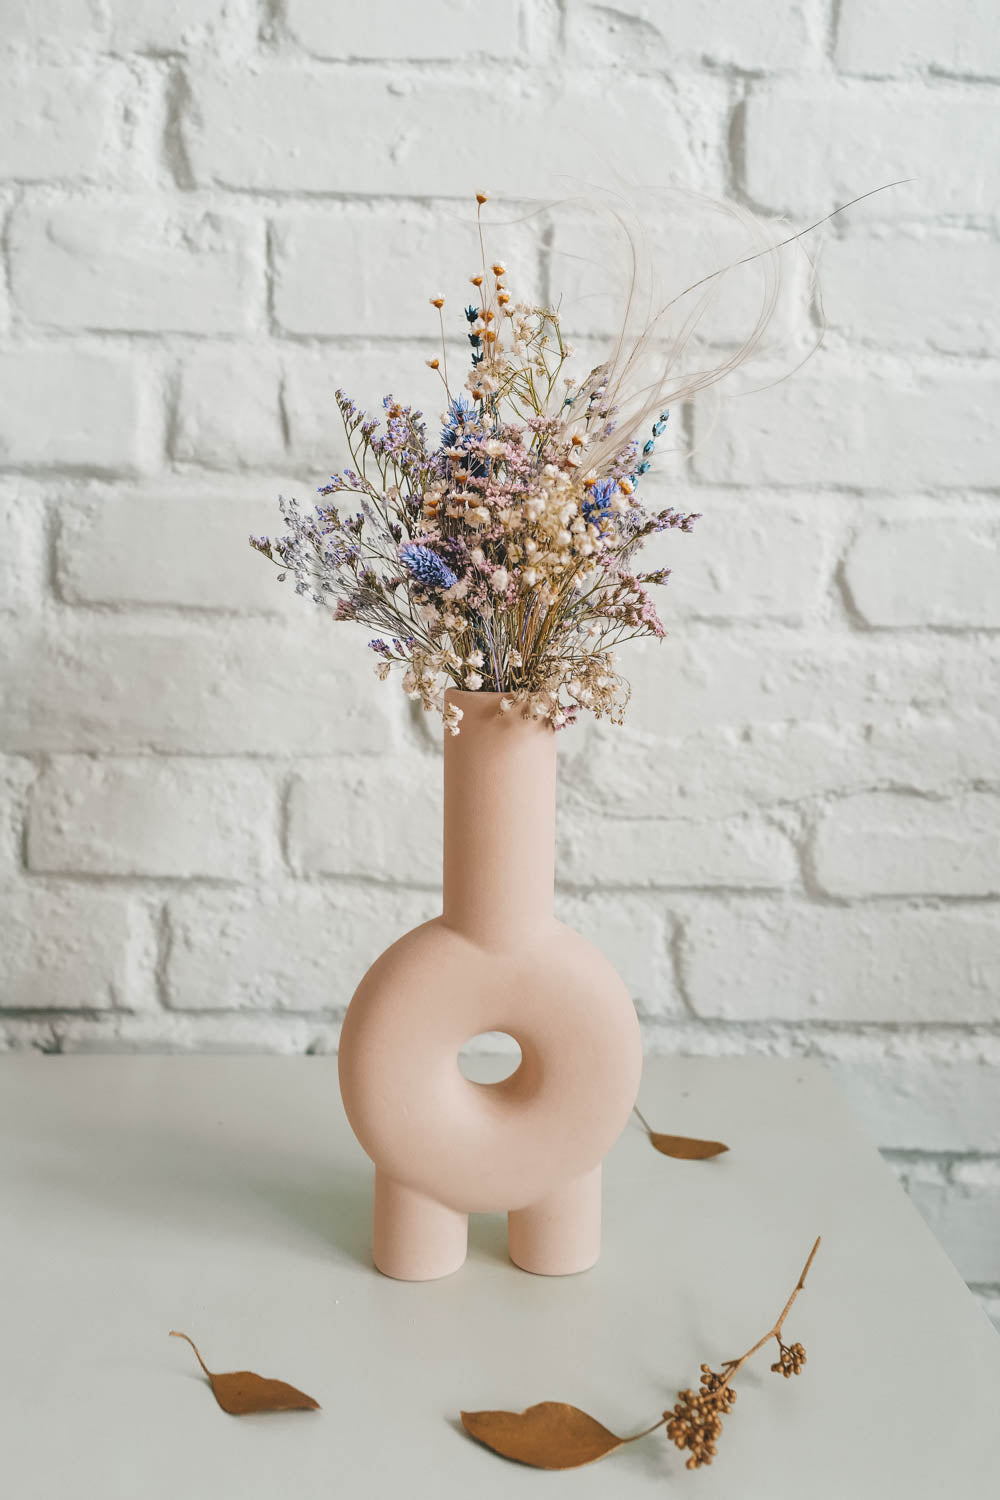 Everlasting Flowers in a Vase Laura